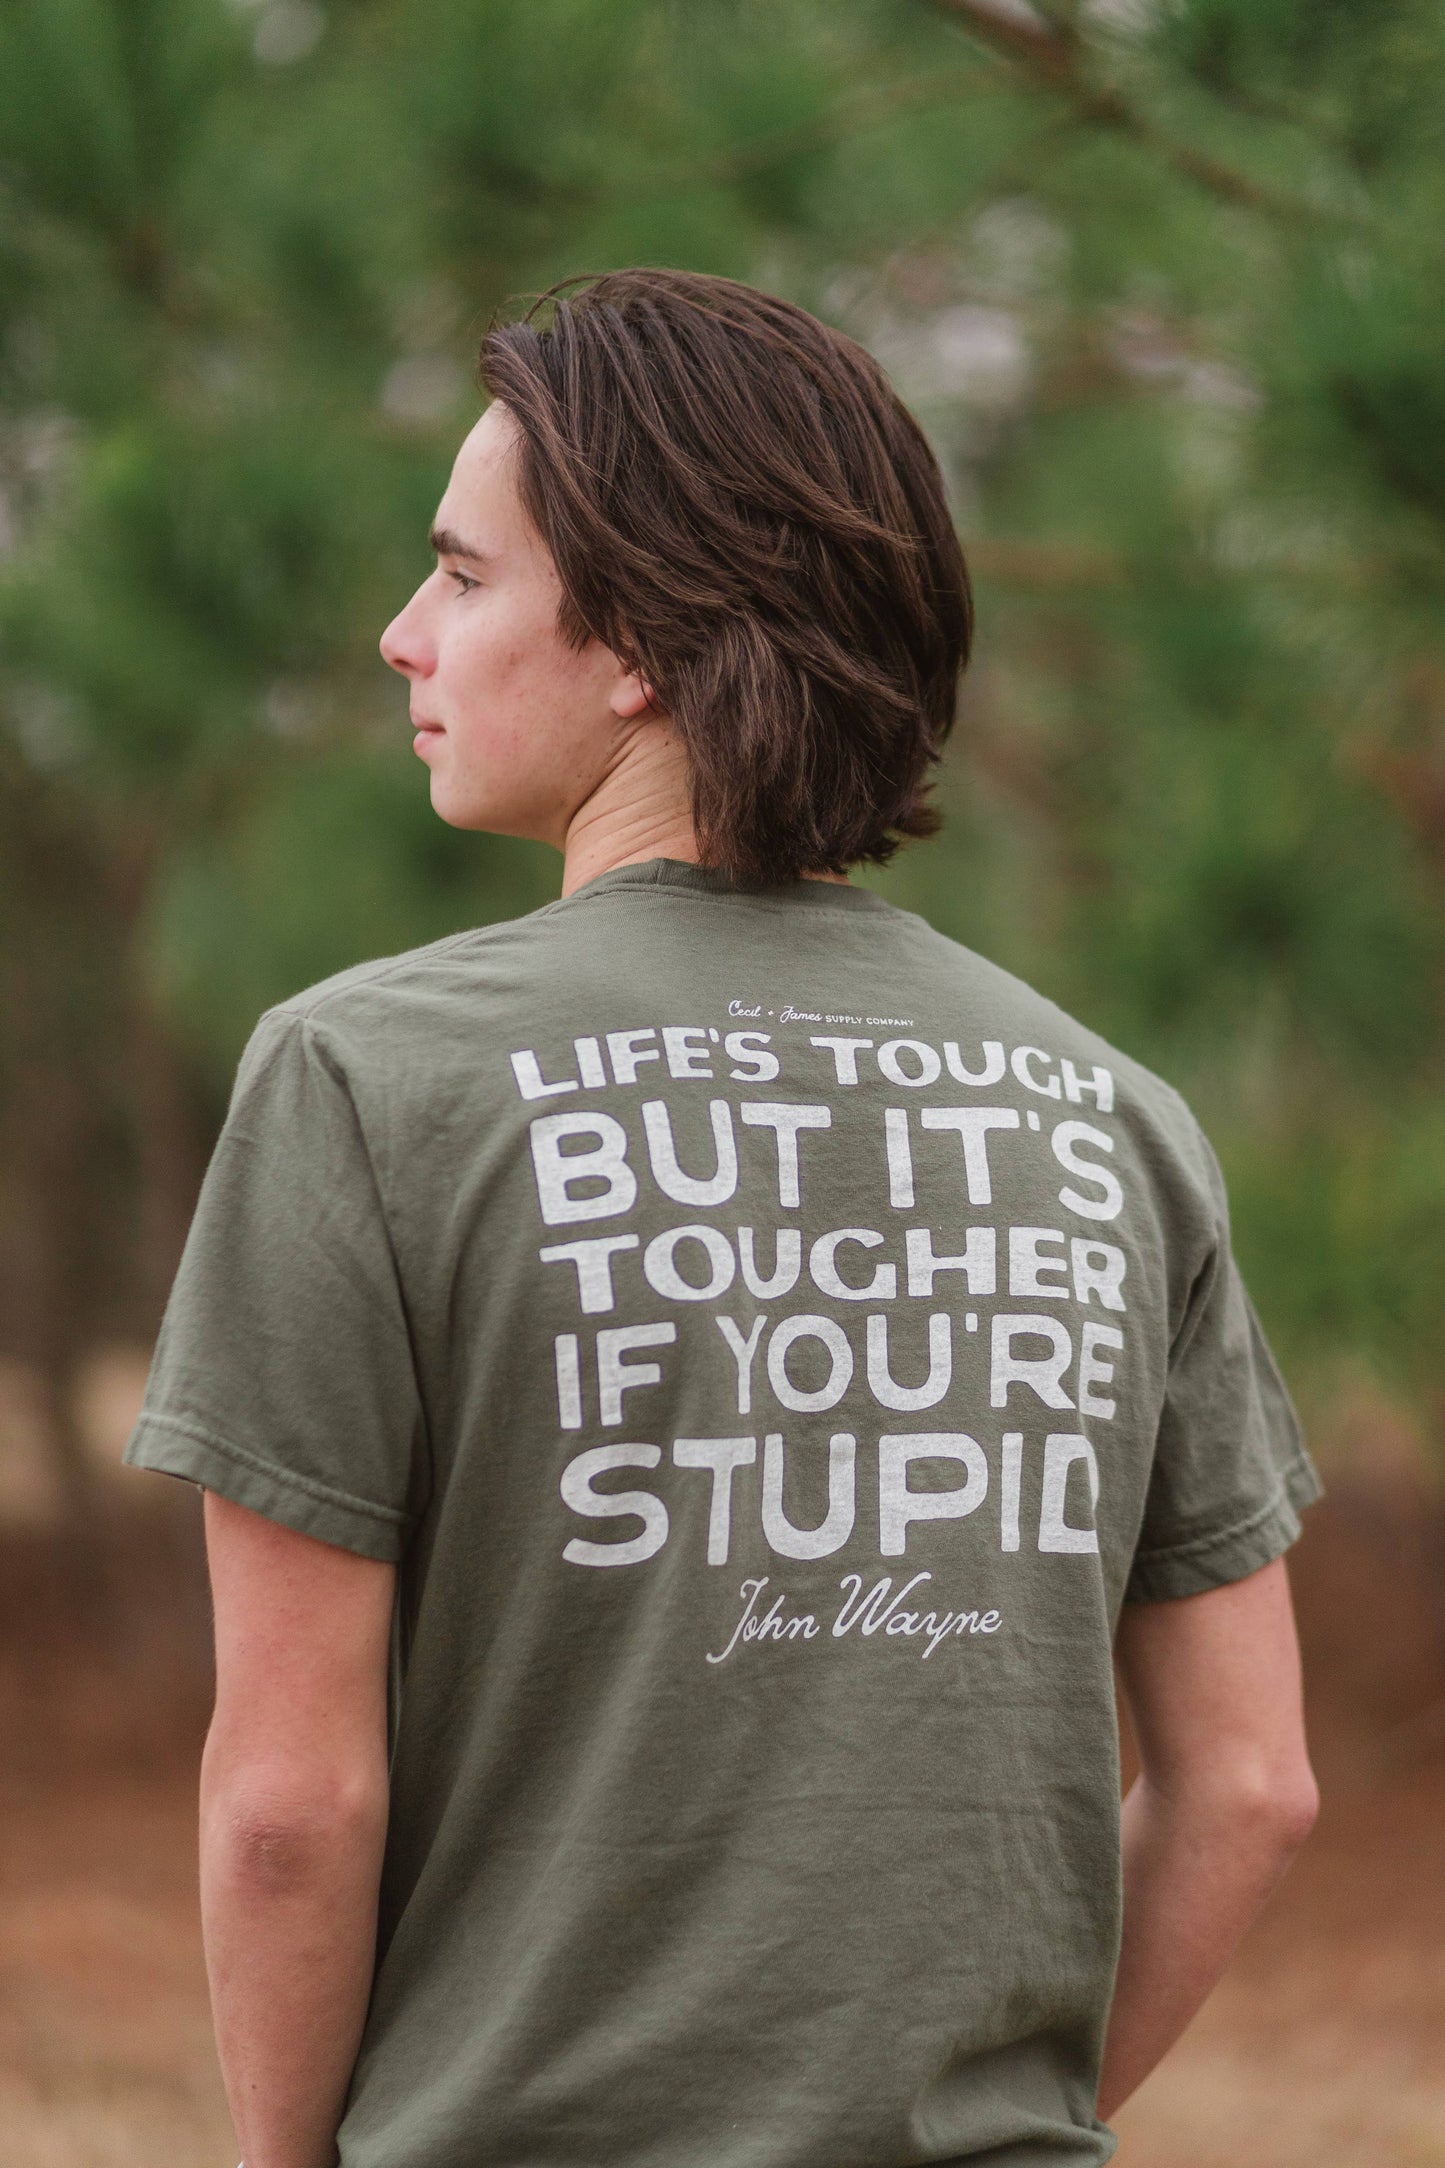 Tougher If You're Stupid T-shirt